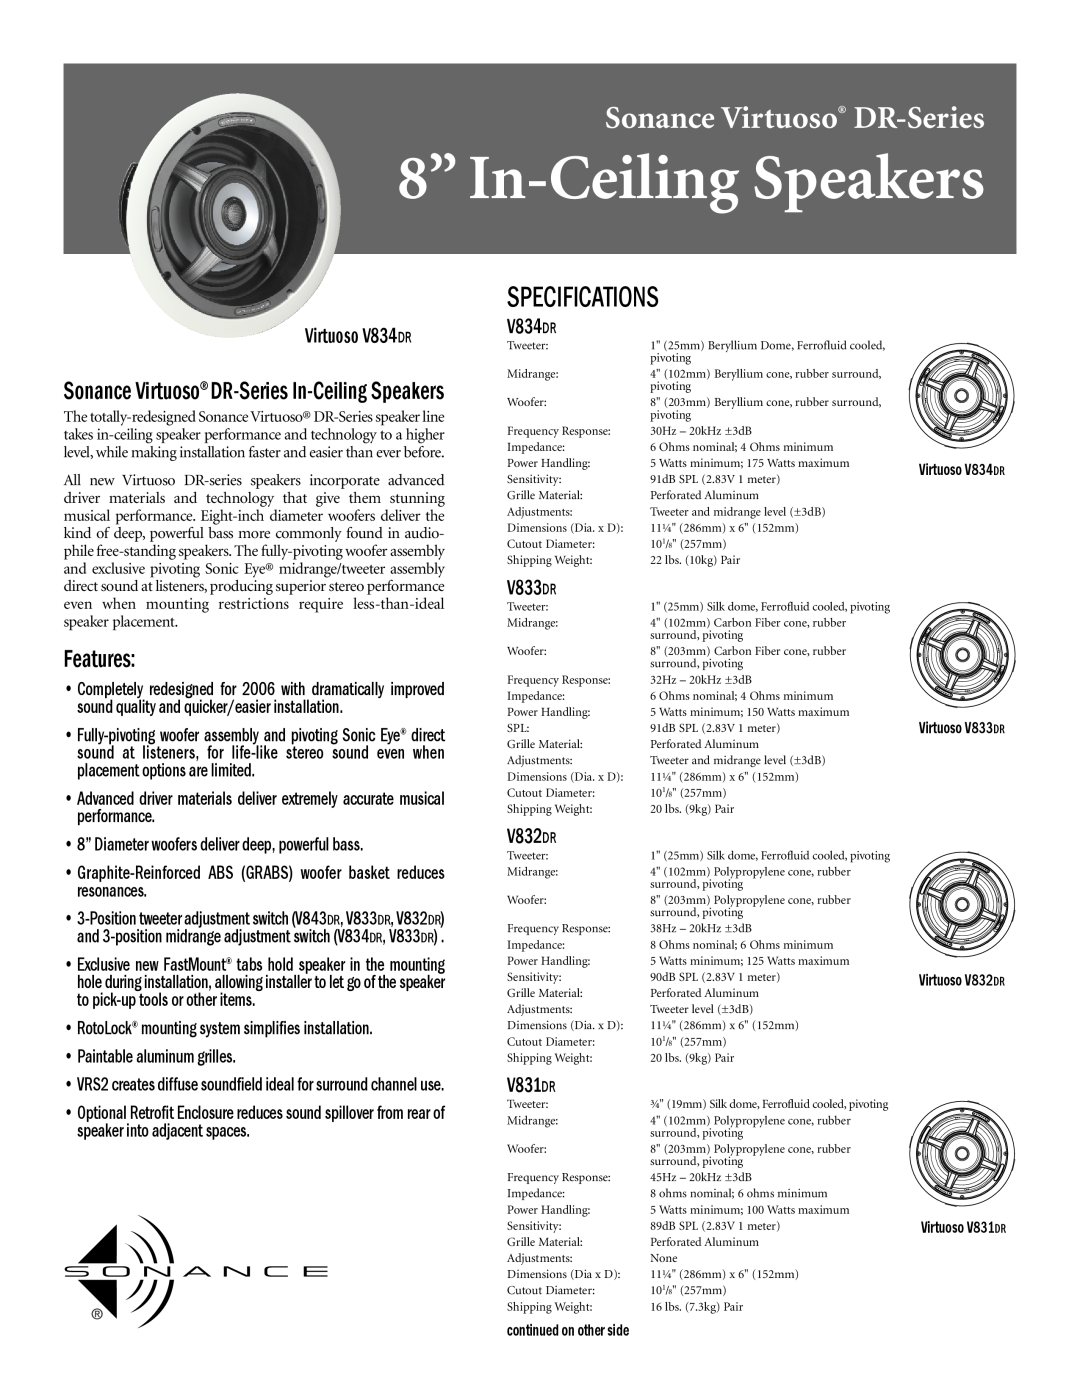 Sonance V831DR specifications 8” In-CeilingSpeakers, Sonance Virtuoso DR-Series, Specifications, Virtuoso V834DR, V833DR 